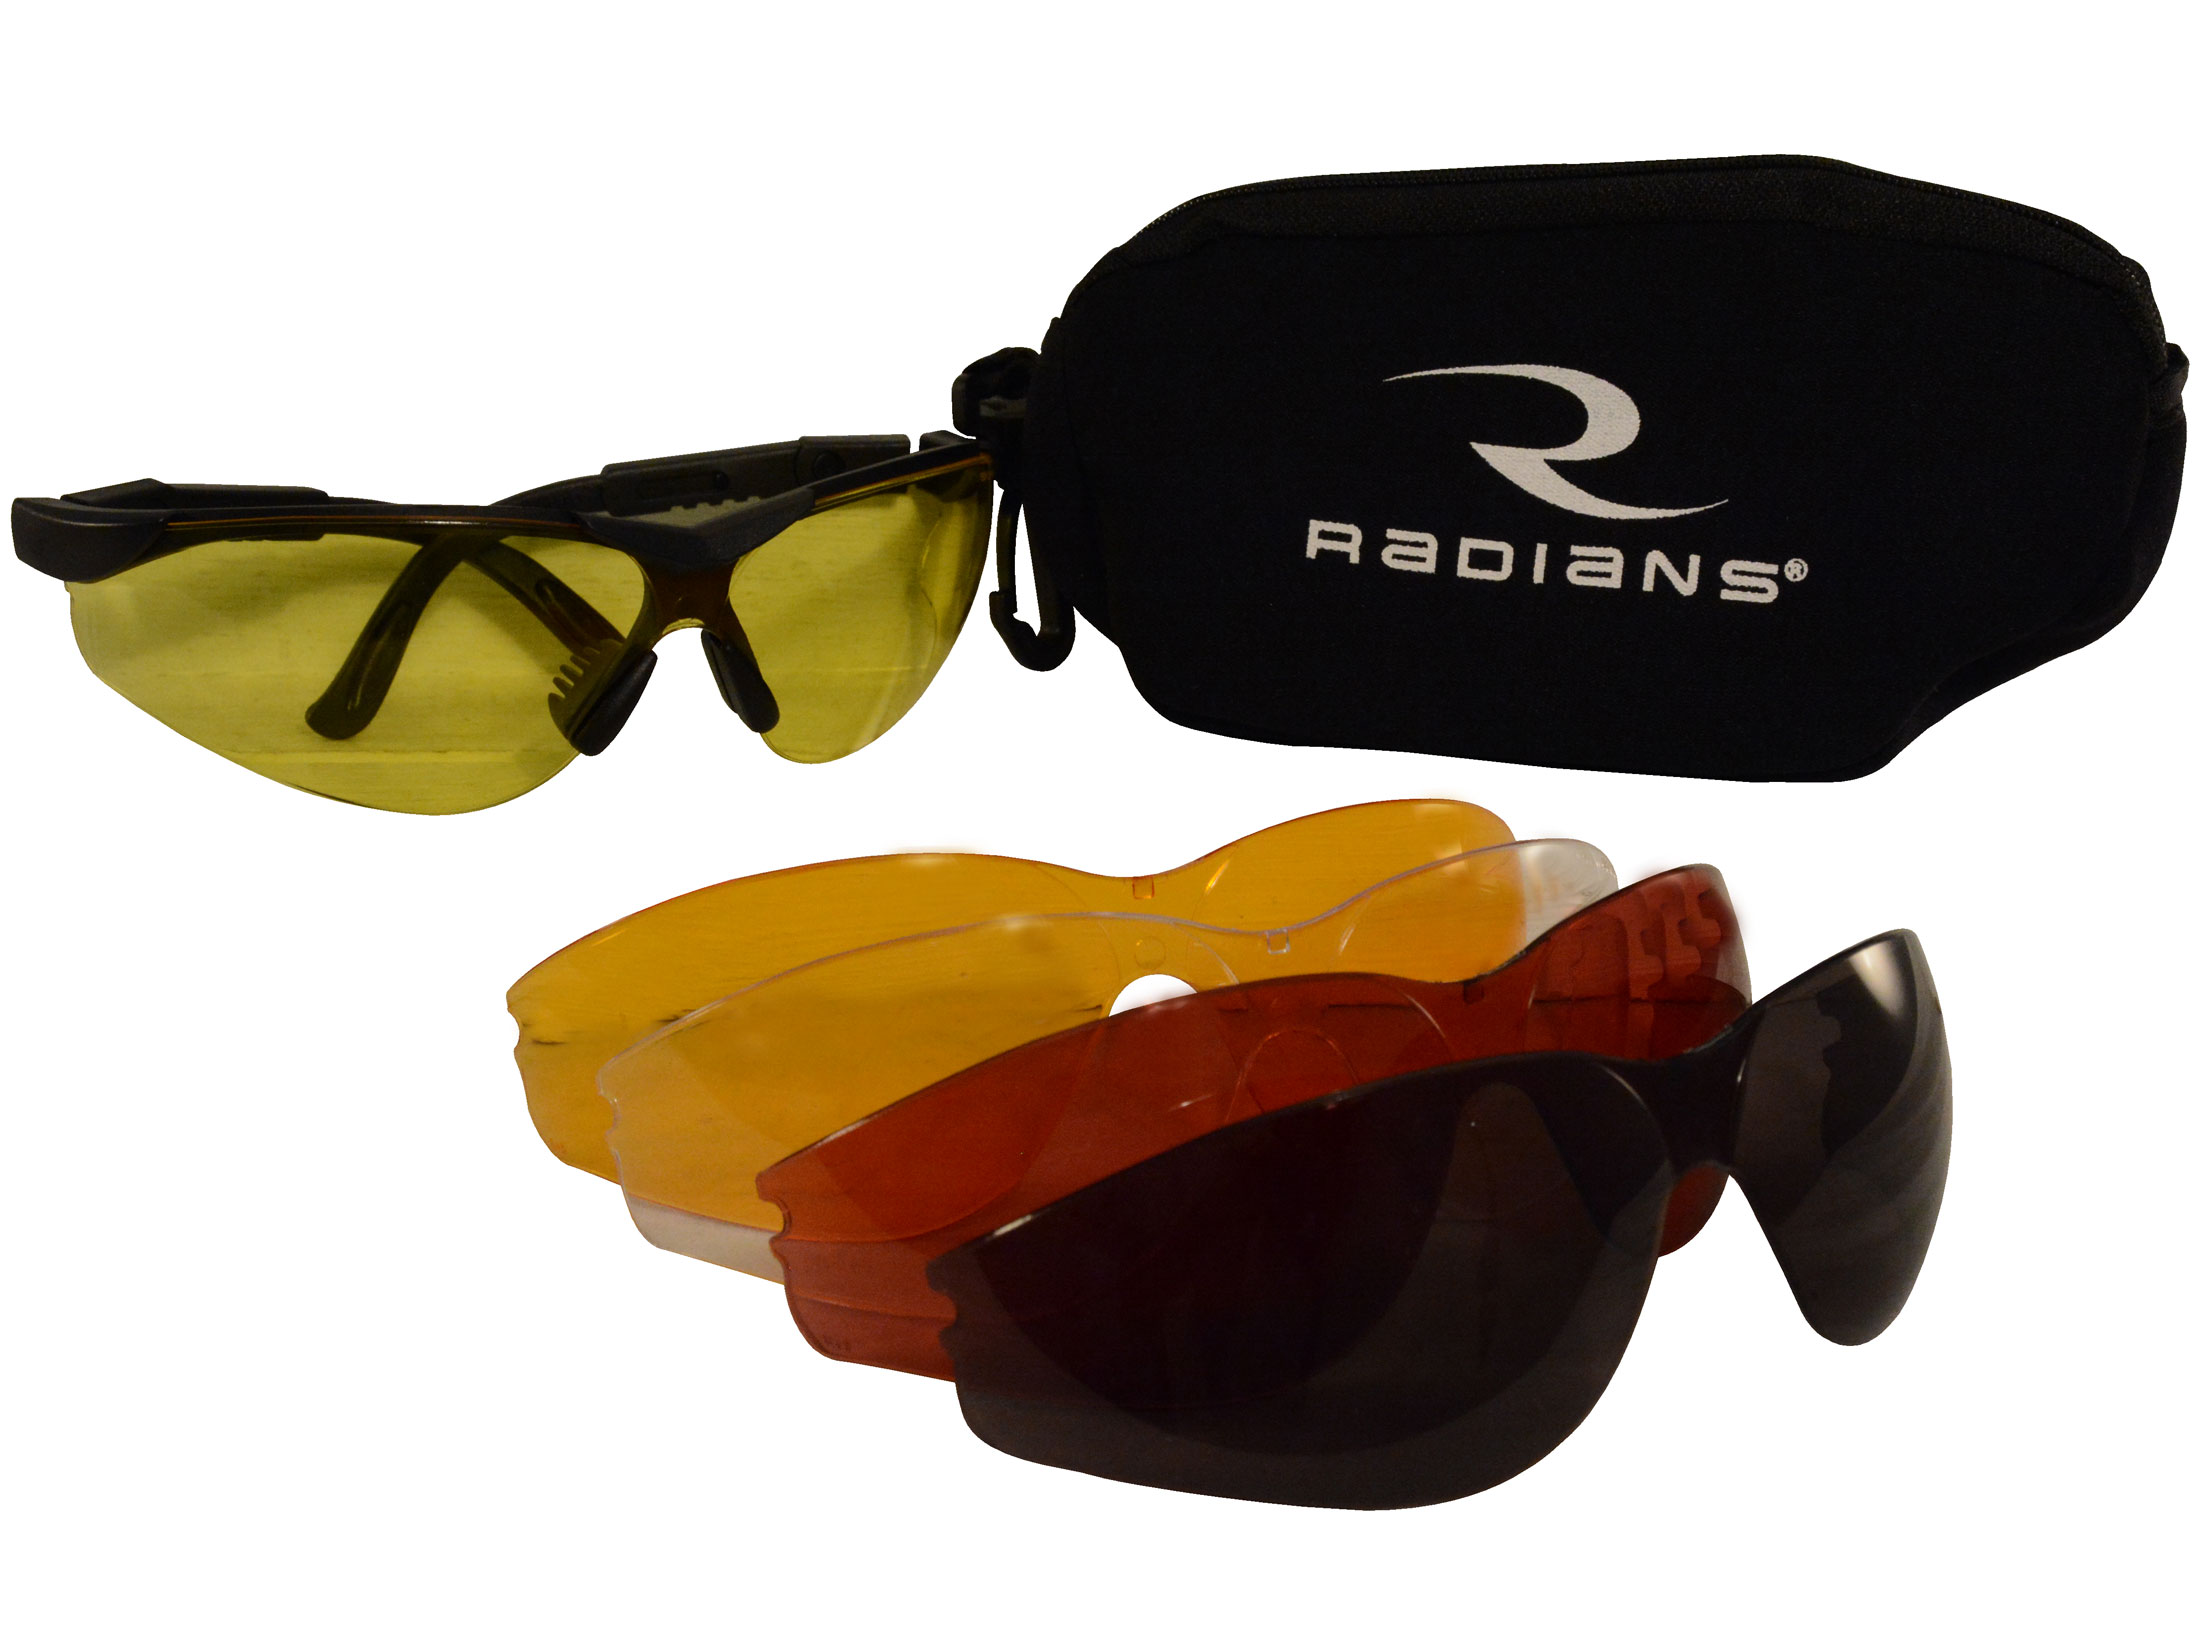 Radians T85rc Shooting Glasses Black Frame 5 Interchangeable Lenses for sale online 